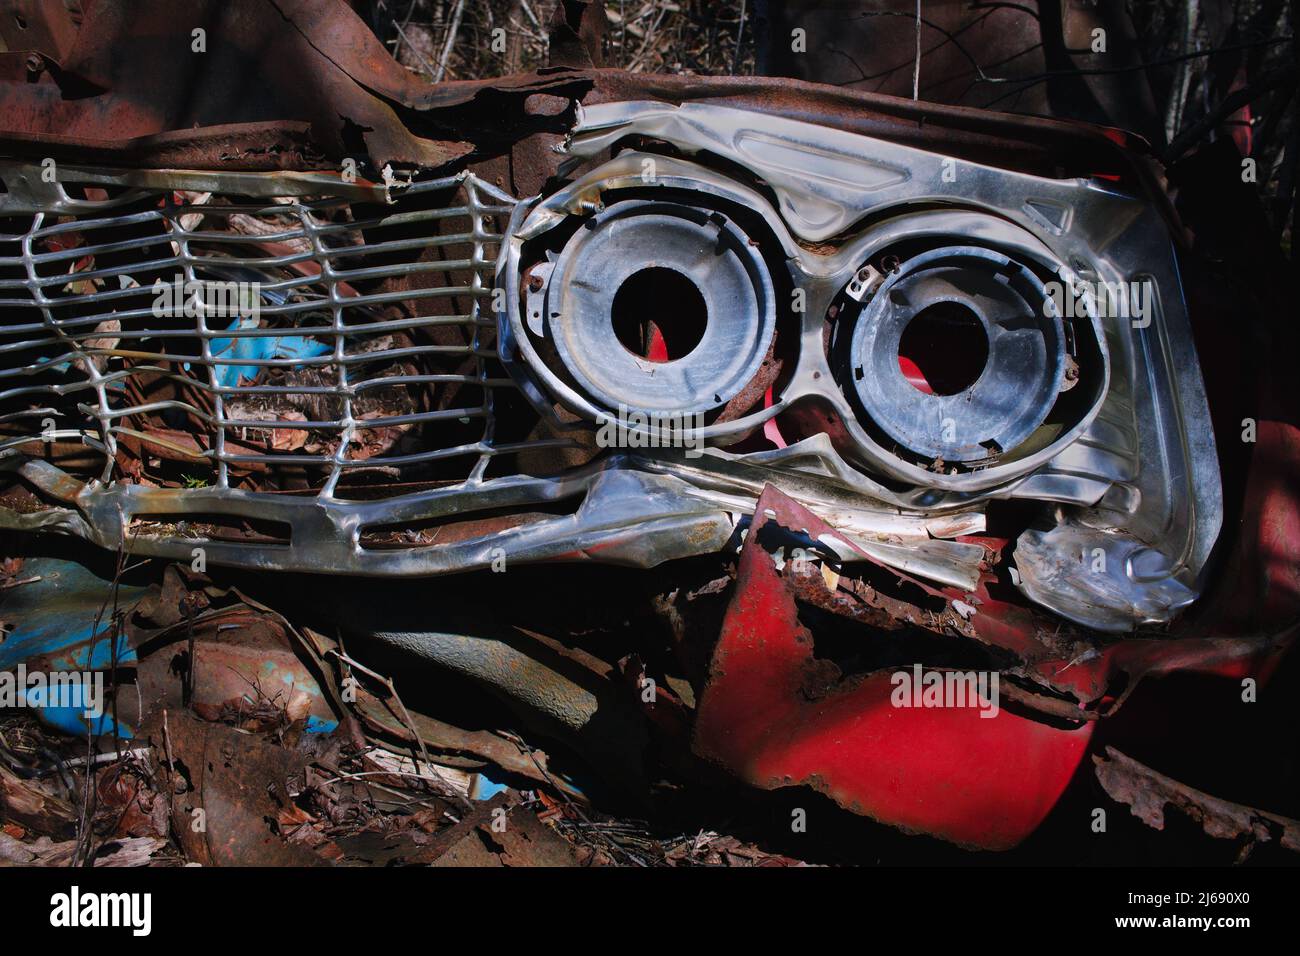 Wrecked vintage auto headlight housing resembling evil eyes Stock Photo